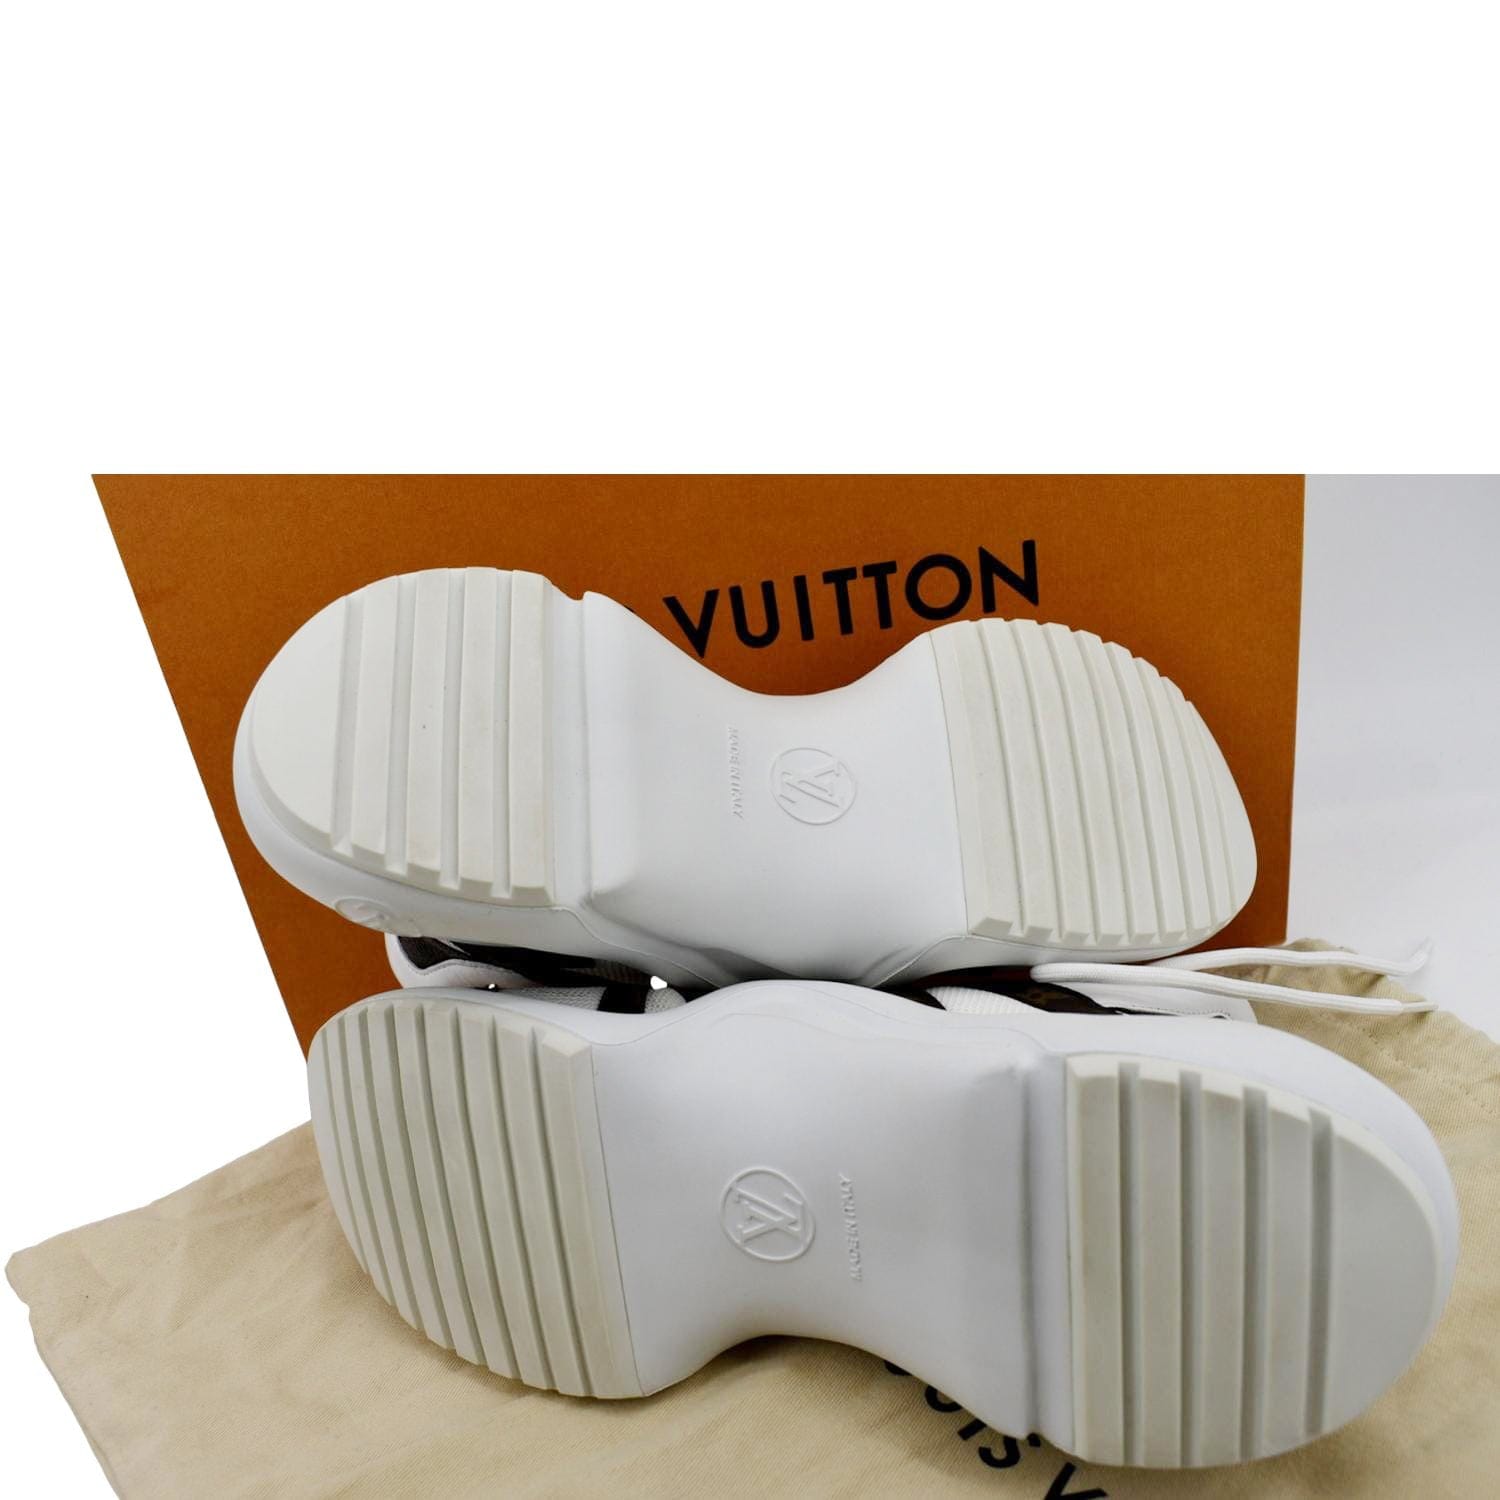 LOUIS VUITTON Calfskin Monogram Game On LV Archlight Sneakers 39.5 White  725565